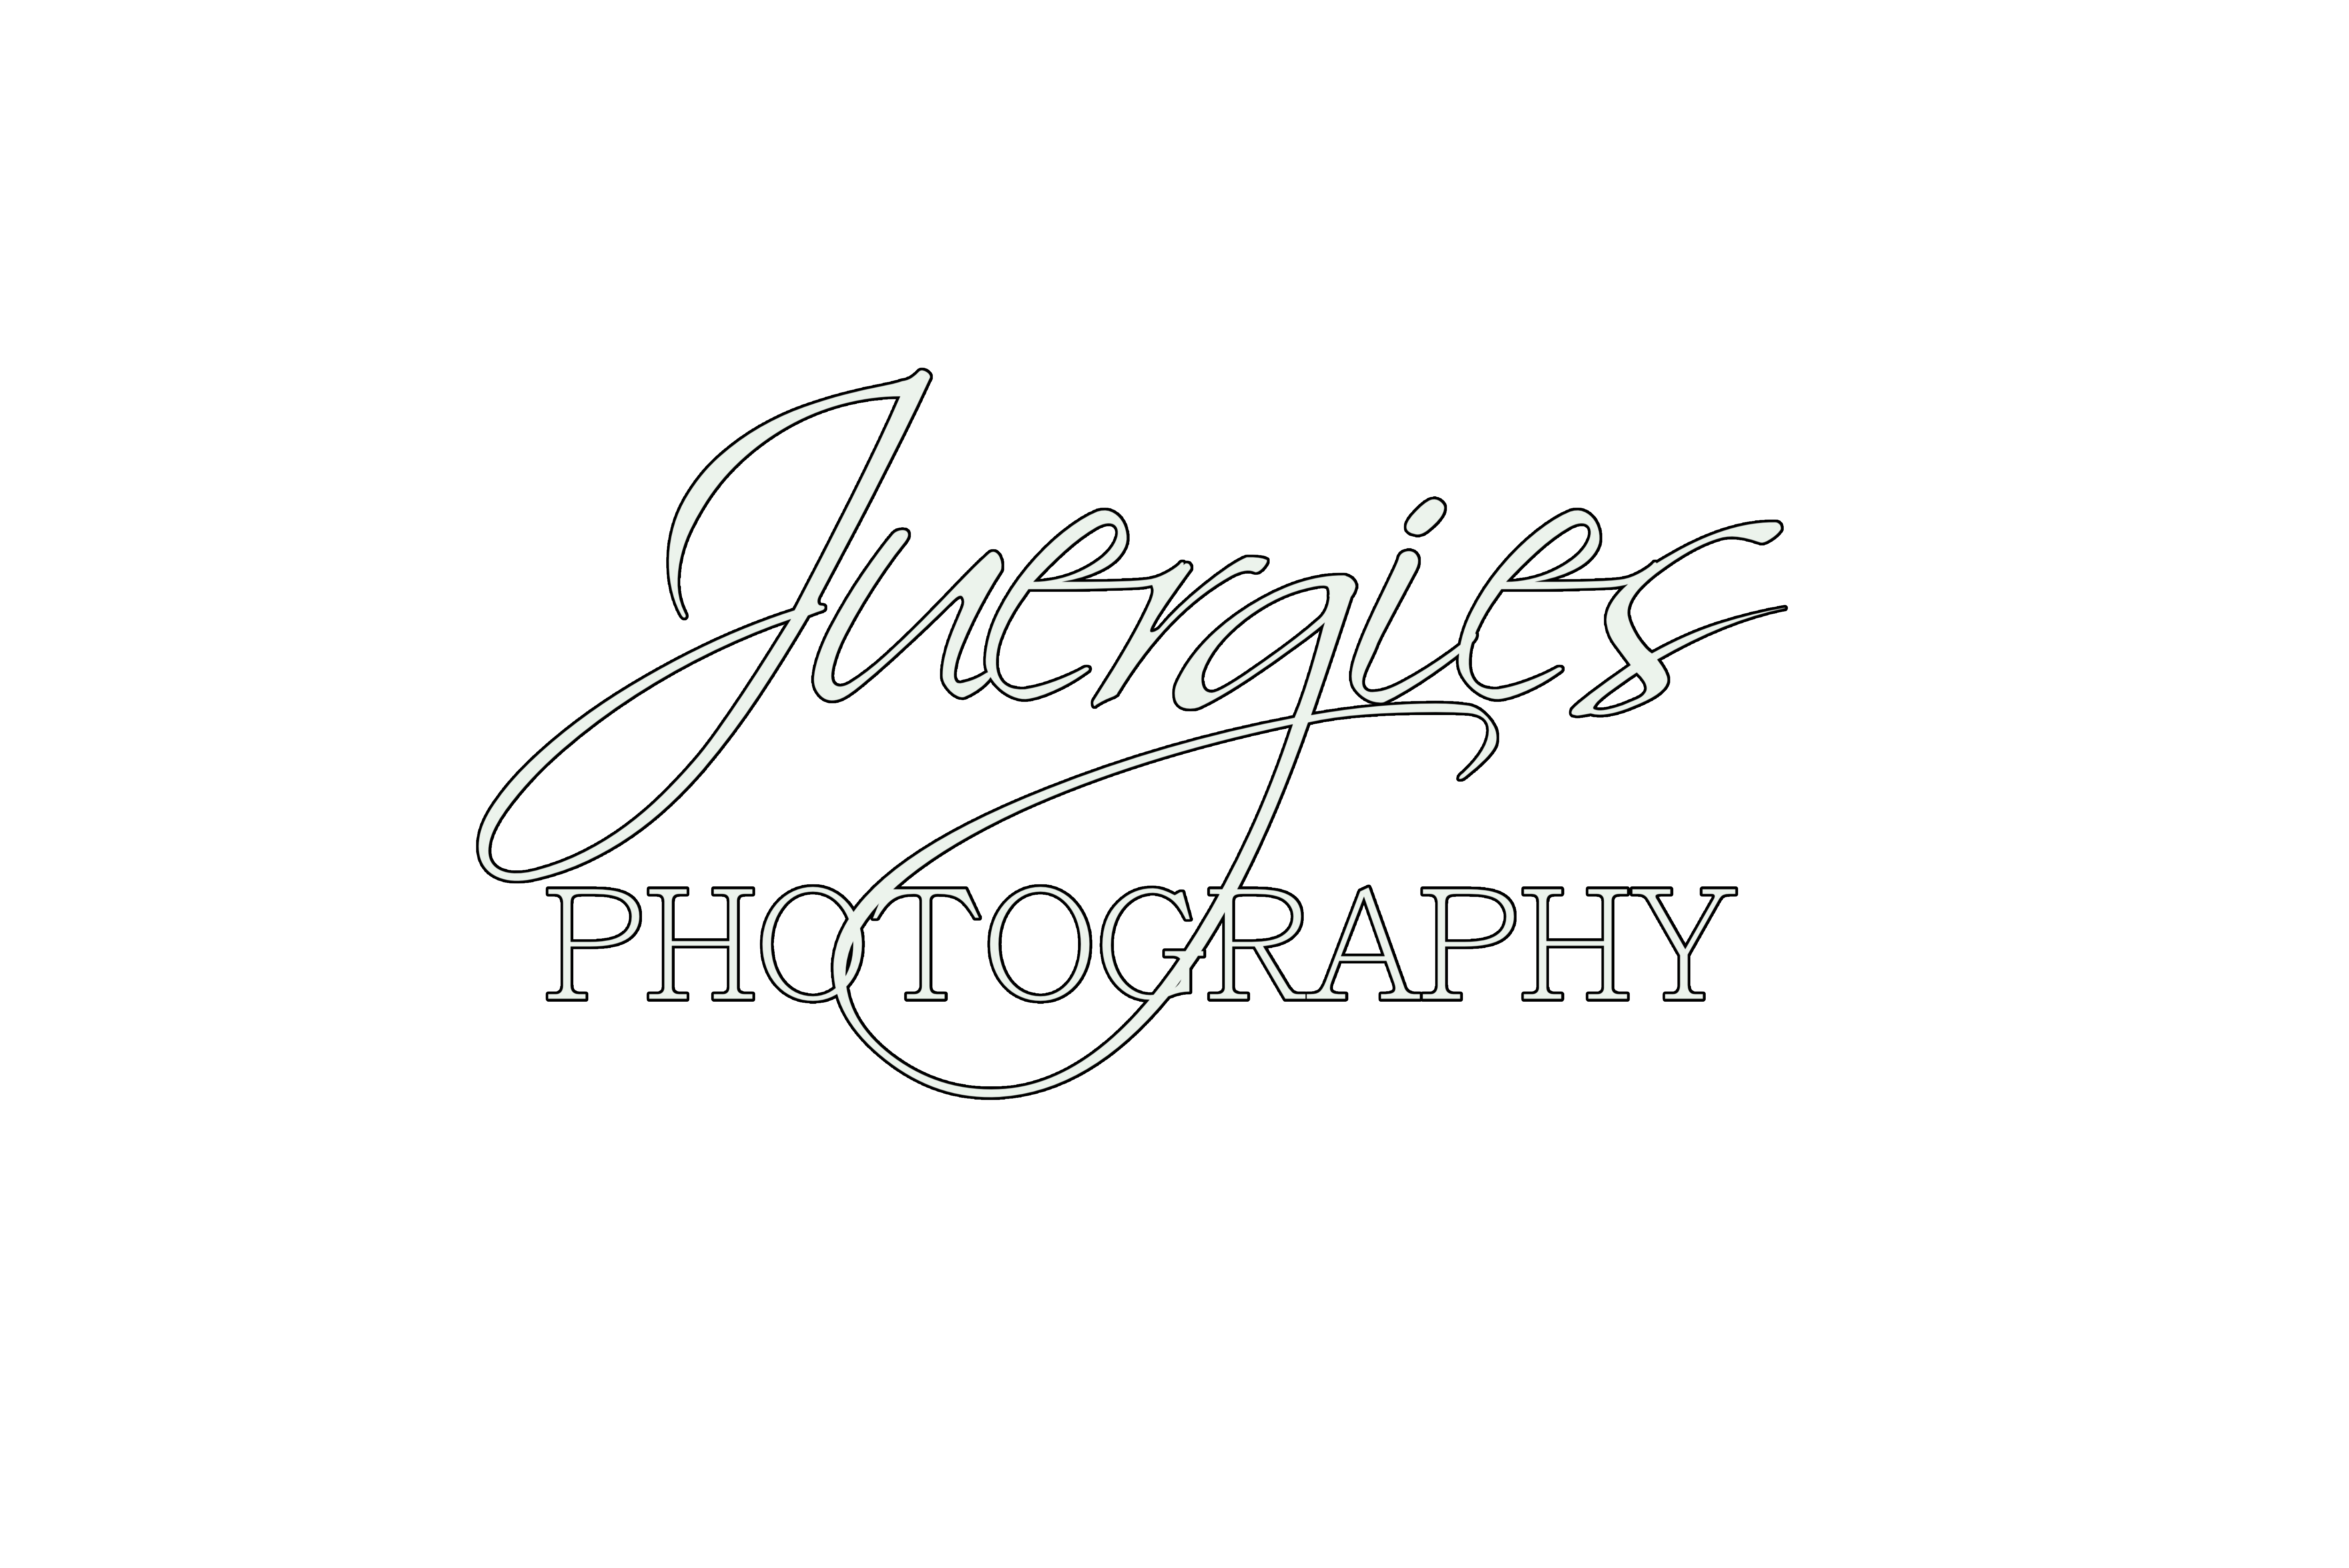 Juergies Photografie